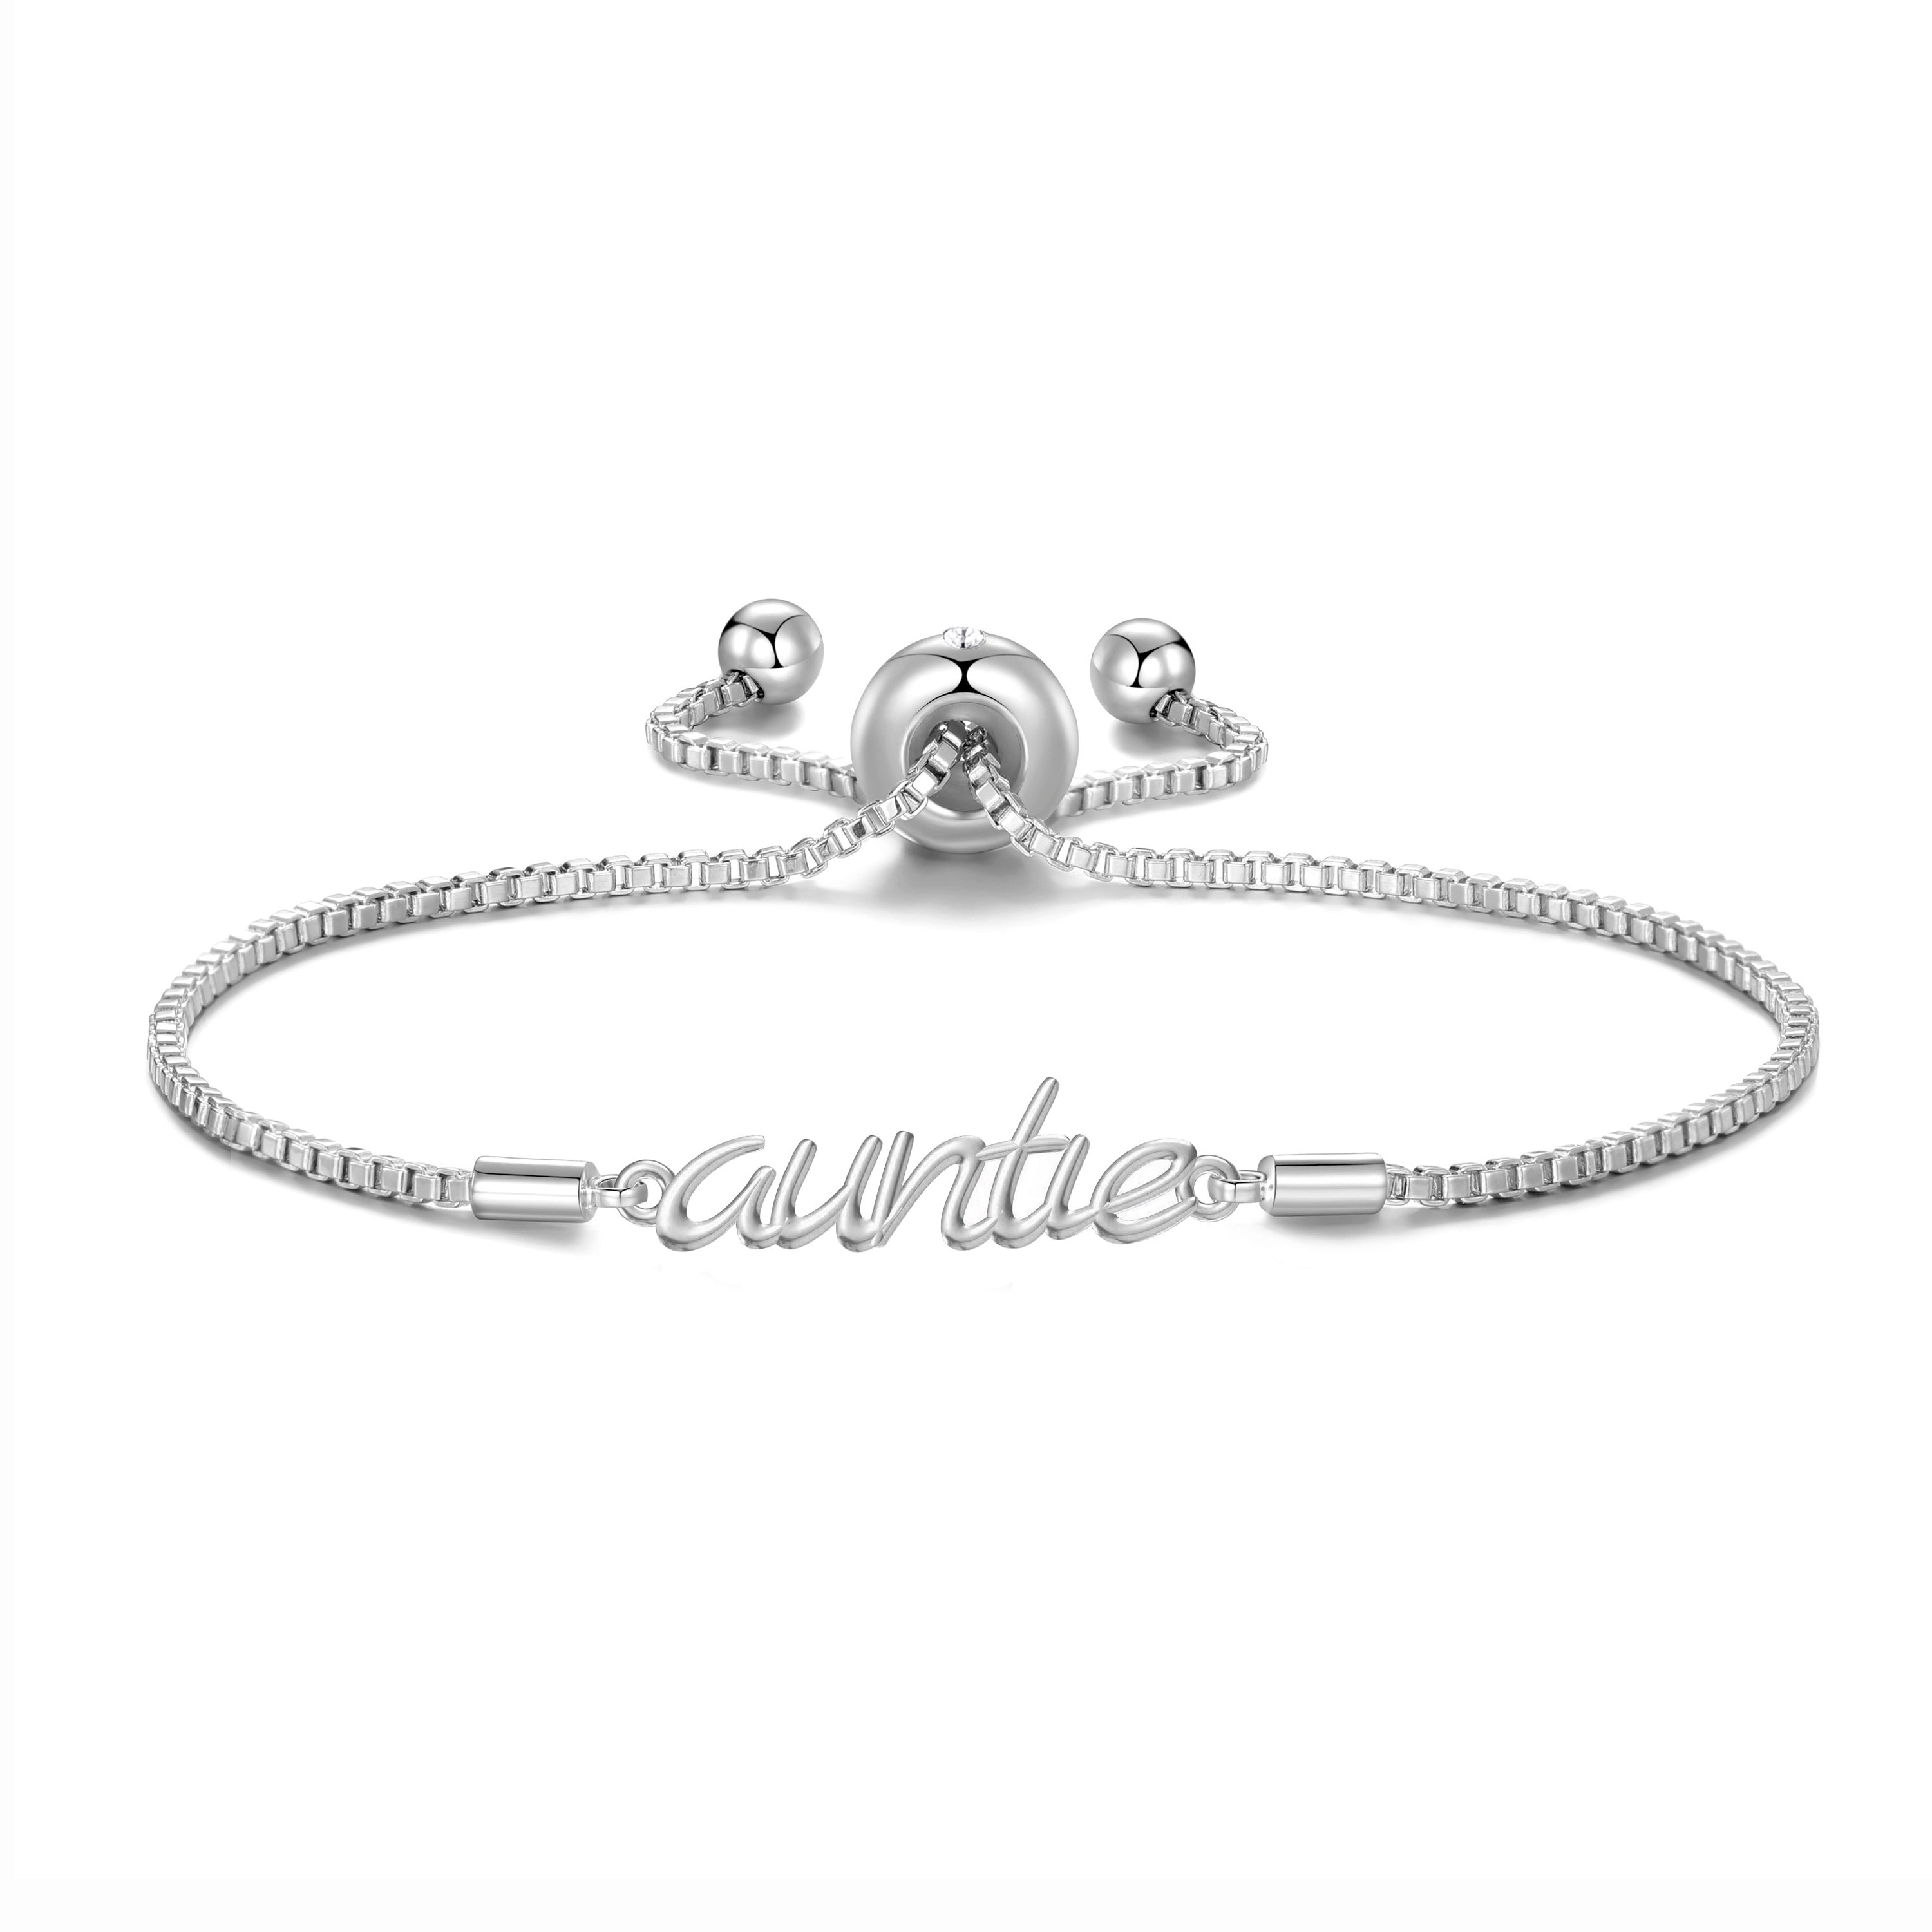 Silver Plated Auntie Bracelet Created with Zircondia® Crystals by Philip Jones Jewellery